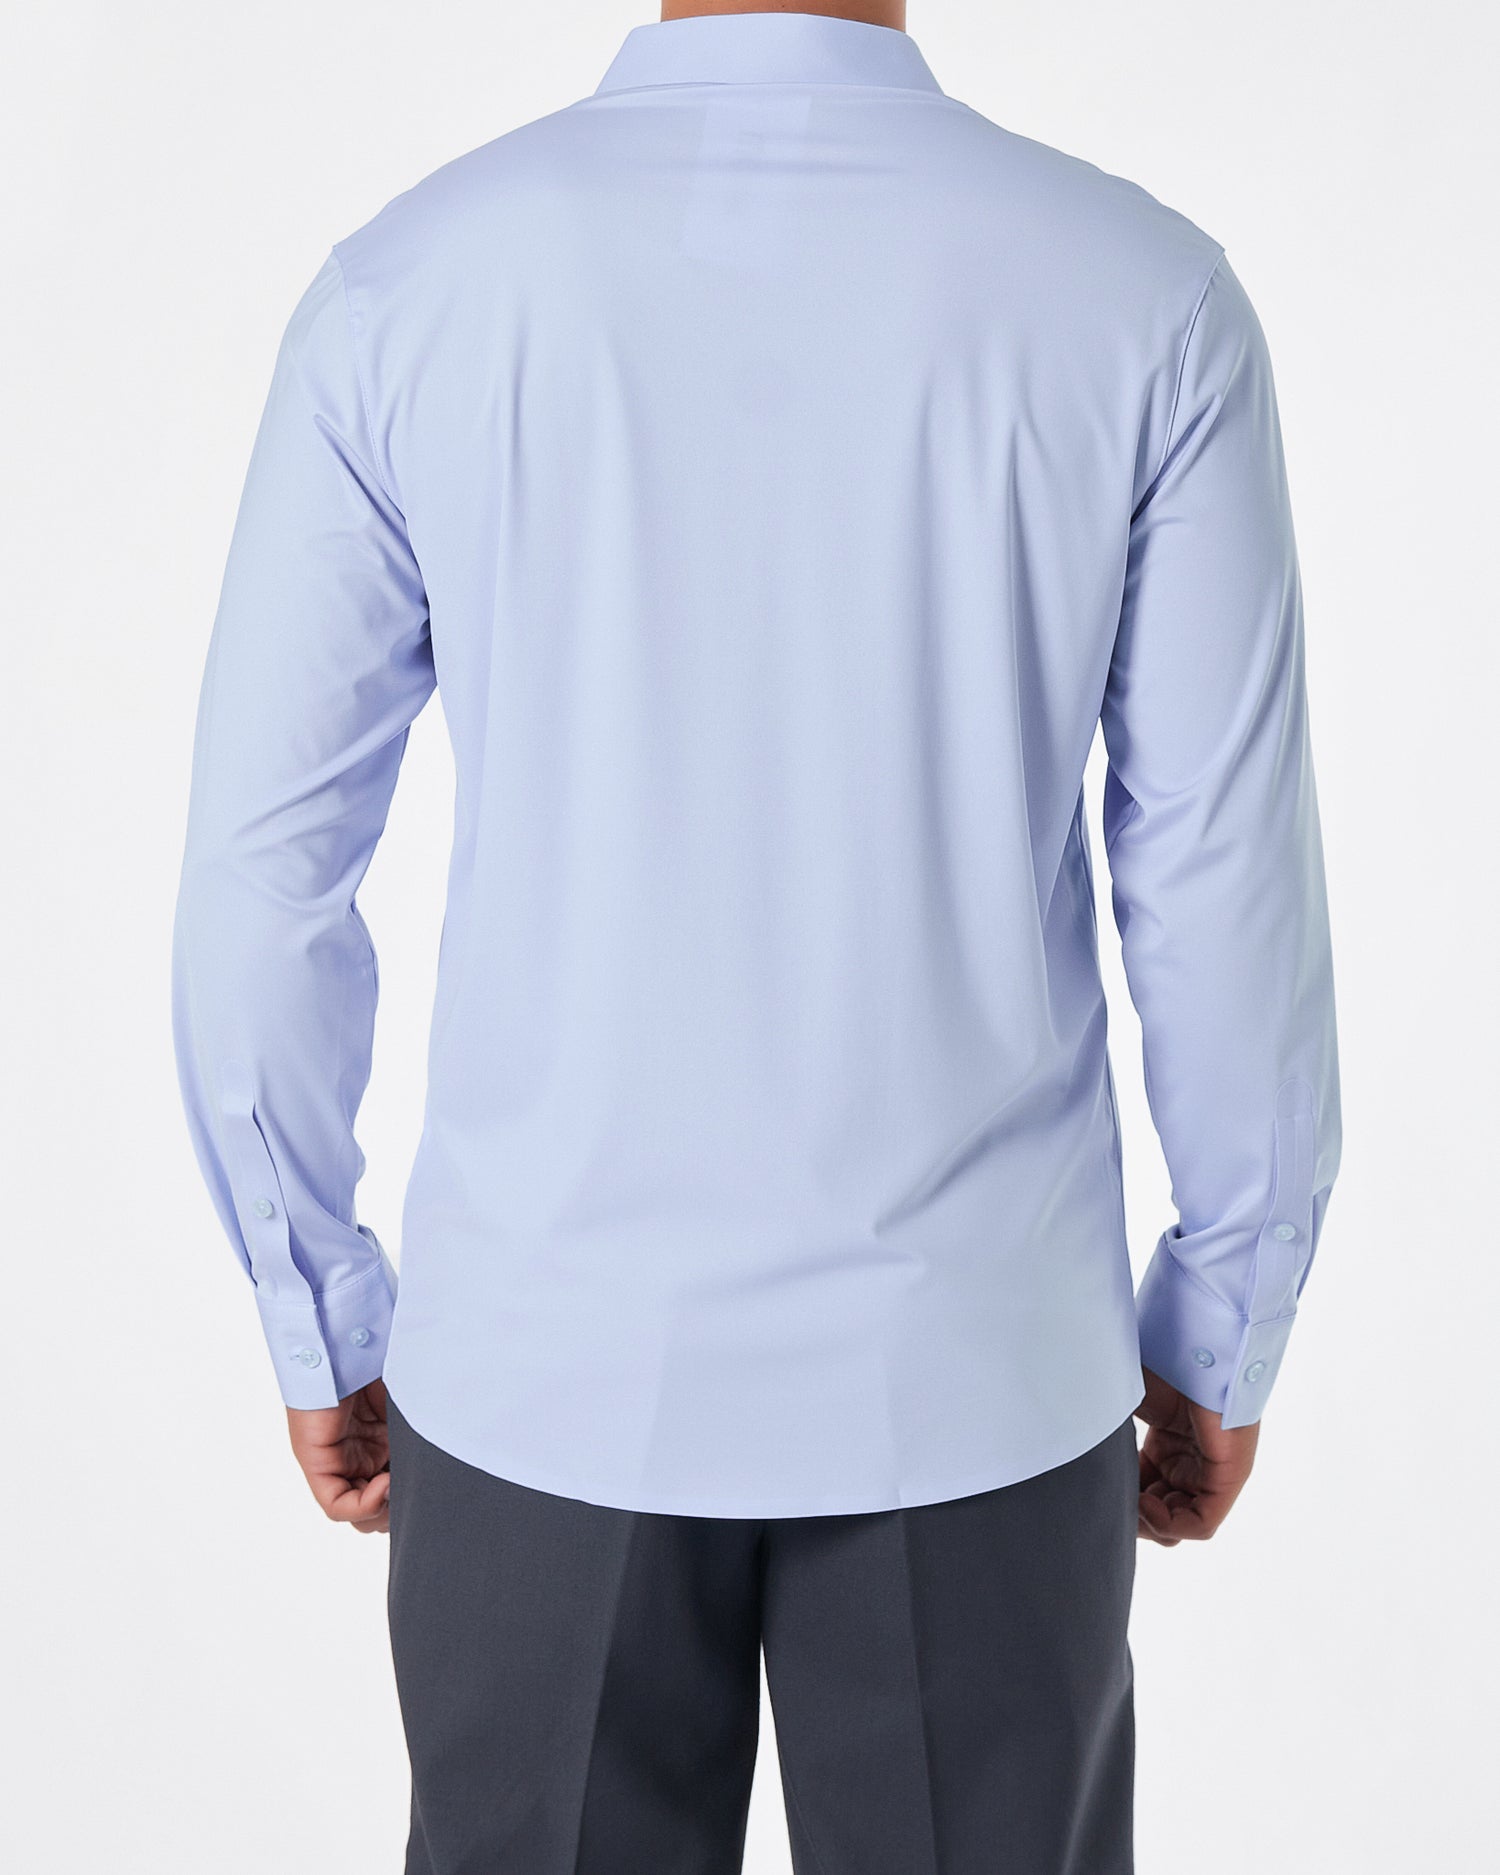 NK Stretchable Men Light Blue Shirts Long Sleeve 24.90